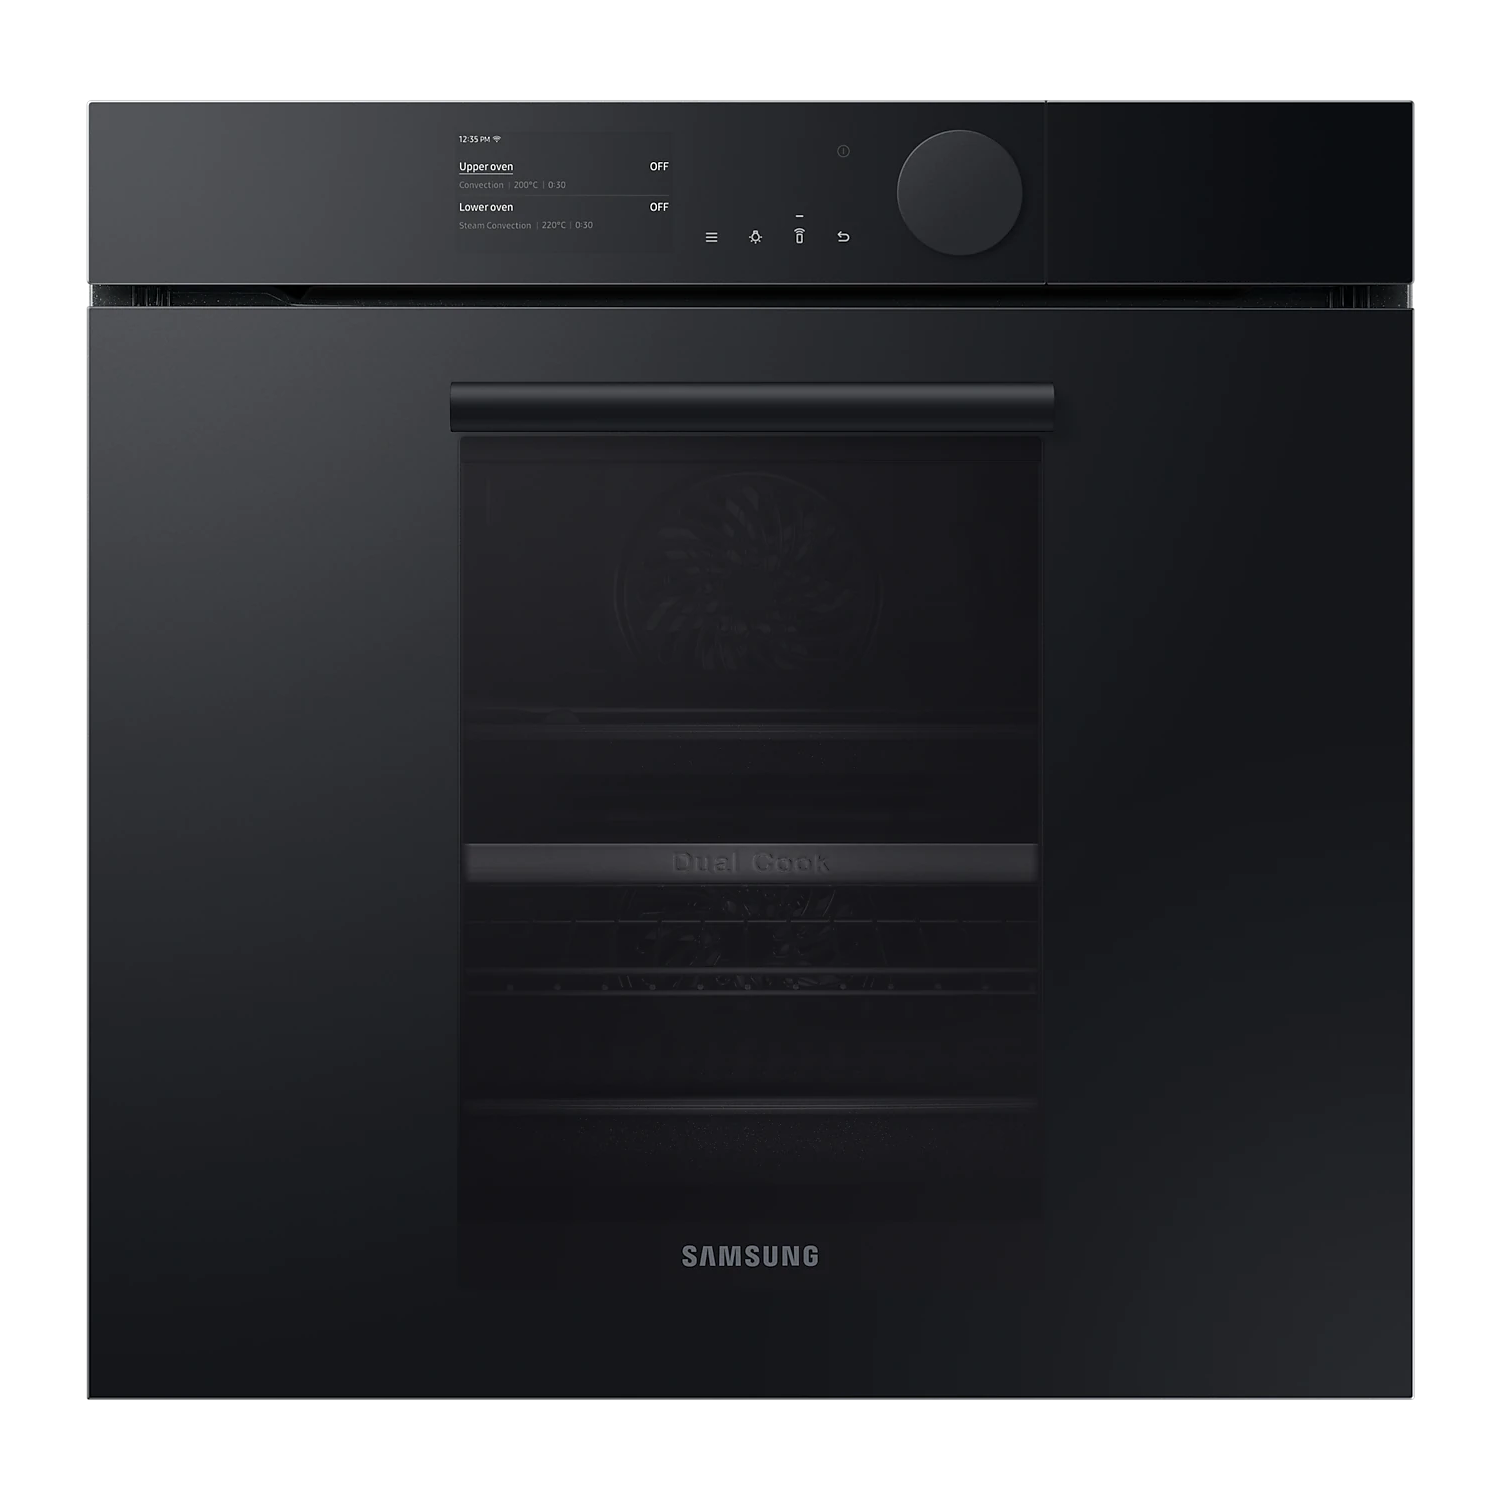 Samsung Infinite Dual Cook Steam Single Oven - Graphite Grey